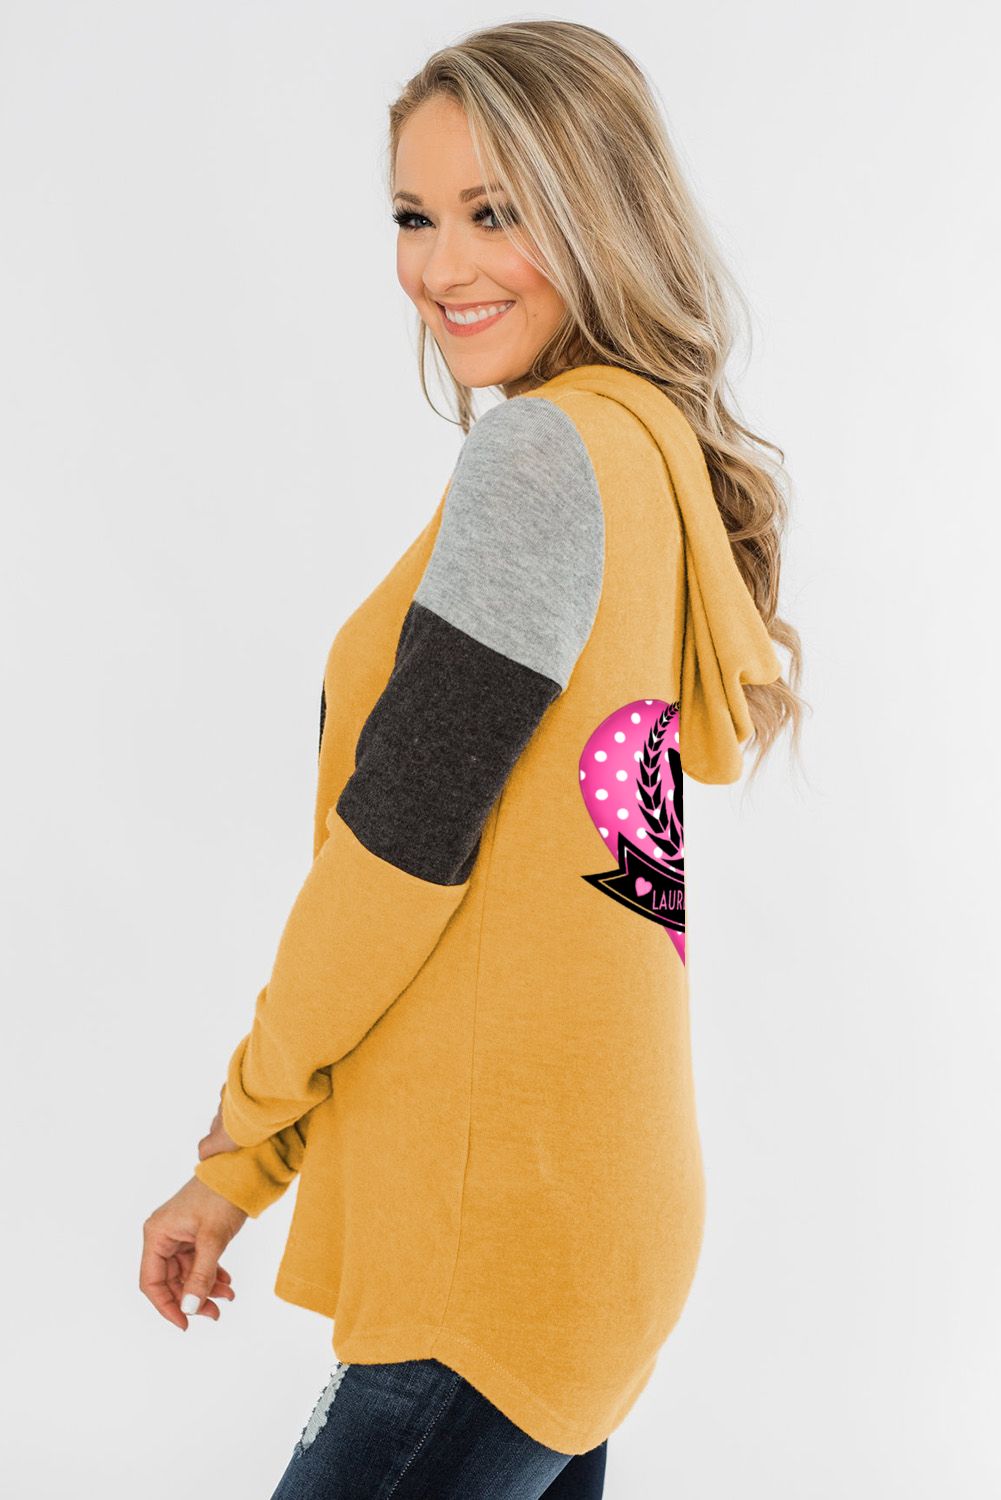 LaurenNichole Women's Soft Cozy Woolen Color Block Hoodie